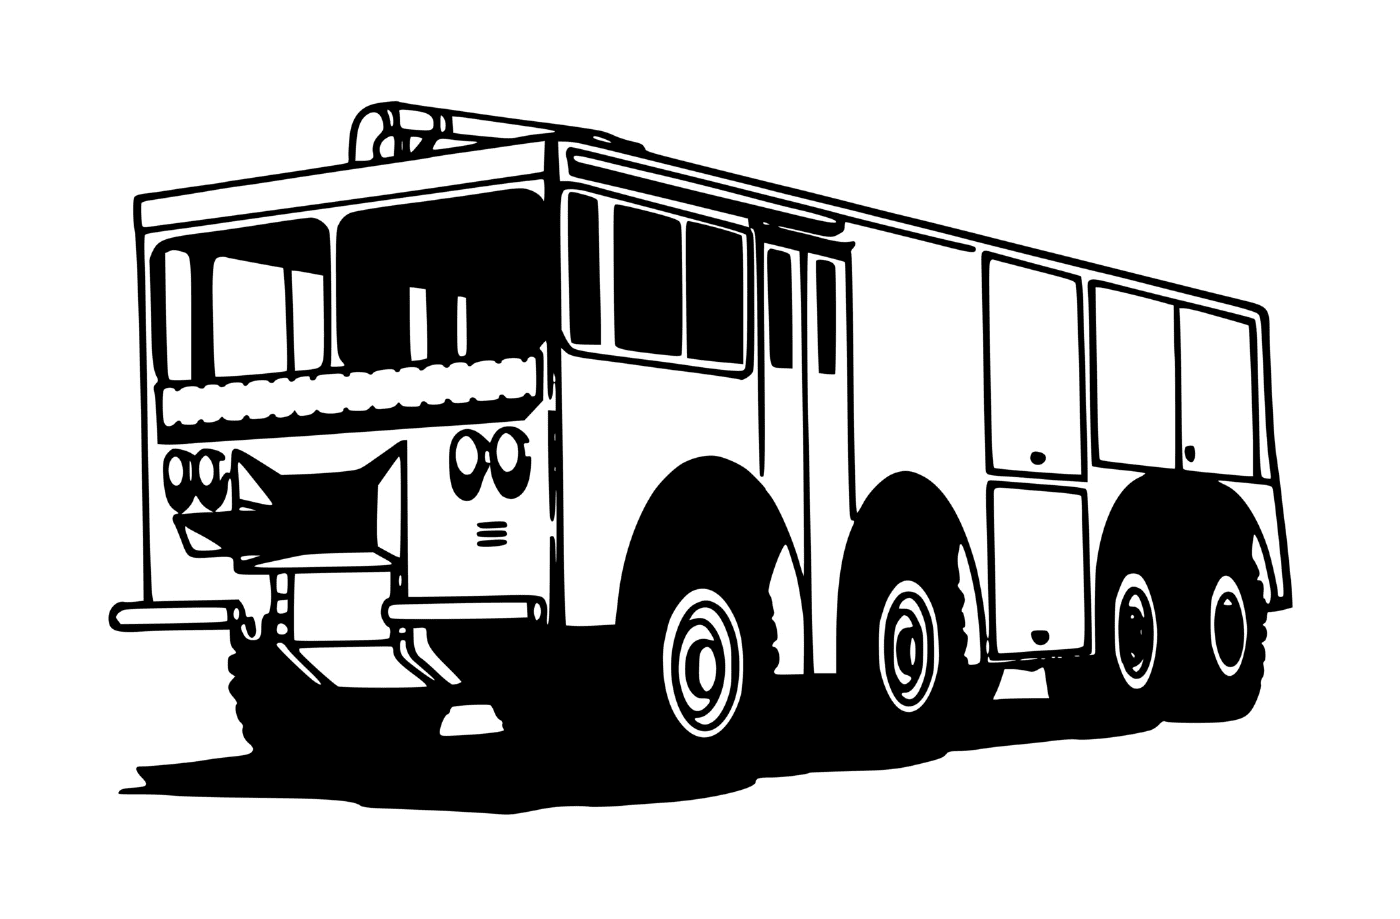  Fire truck in operation 